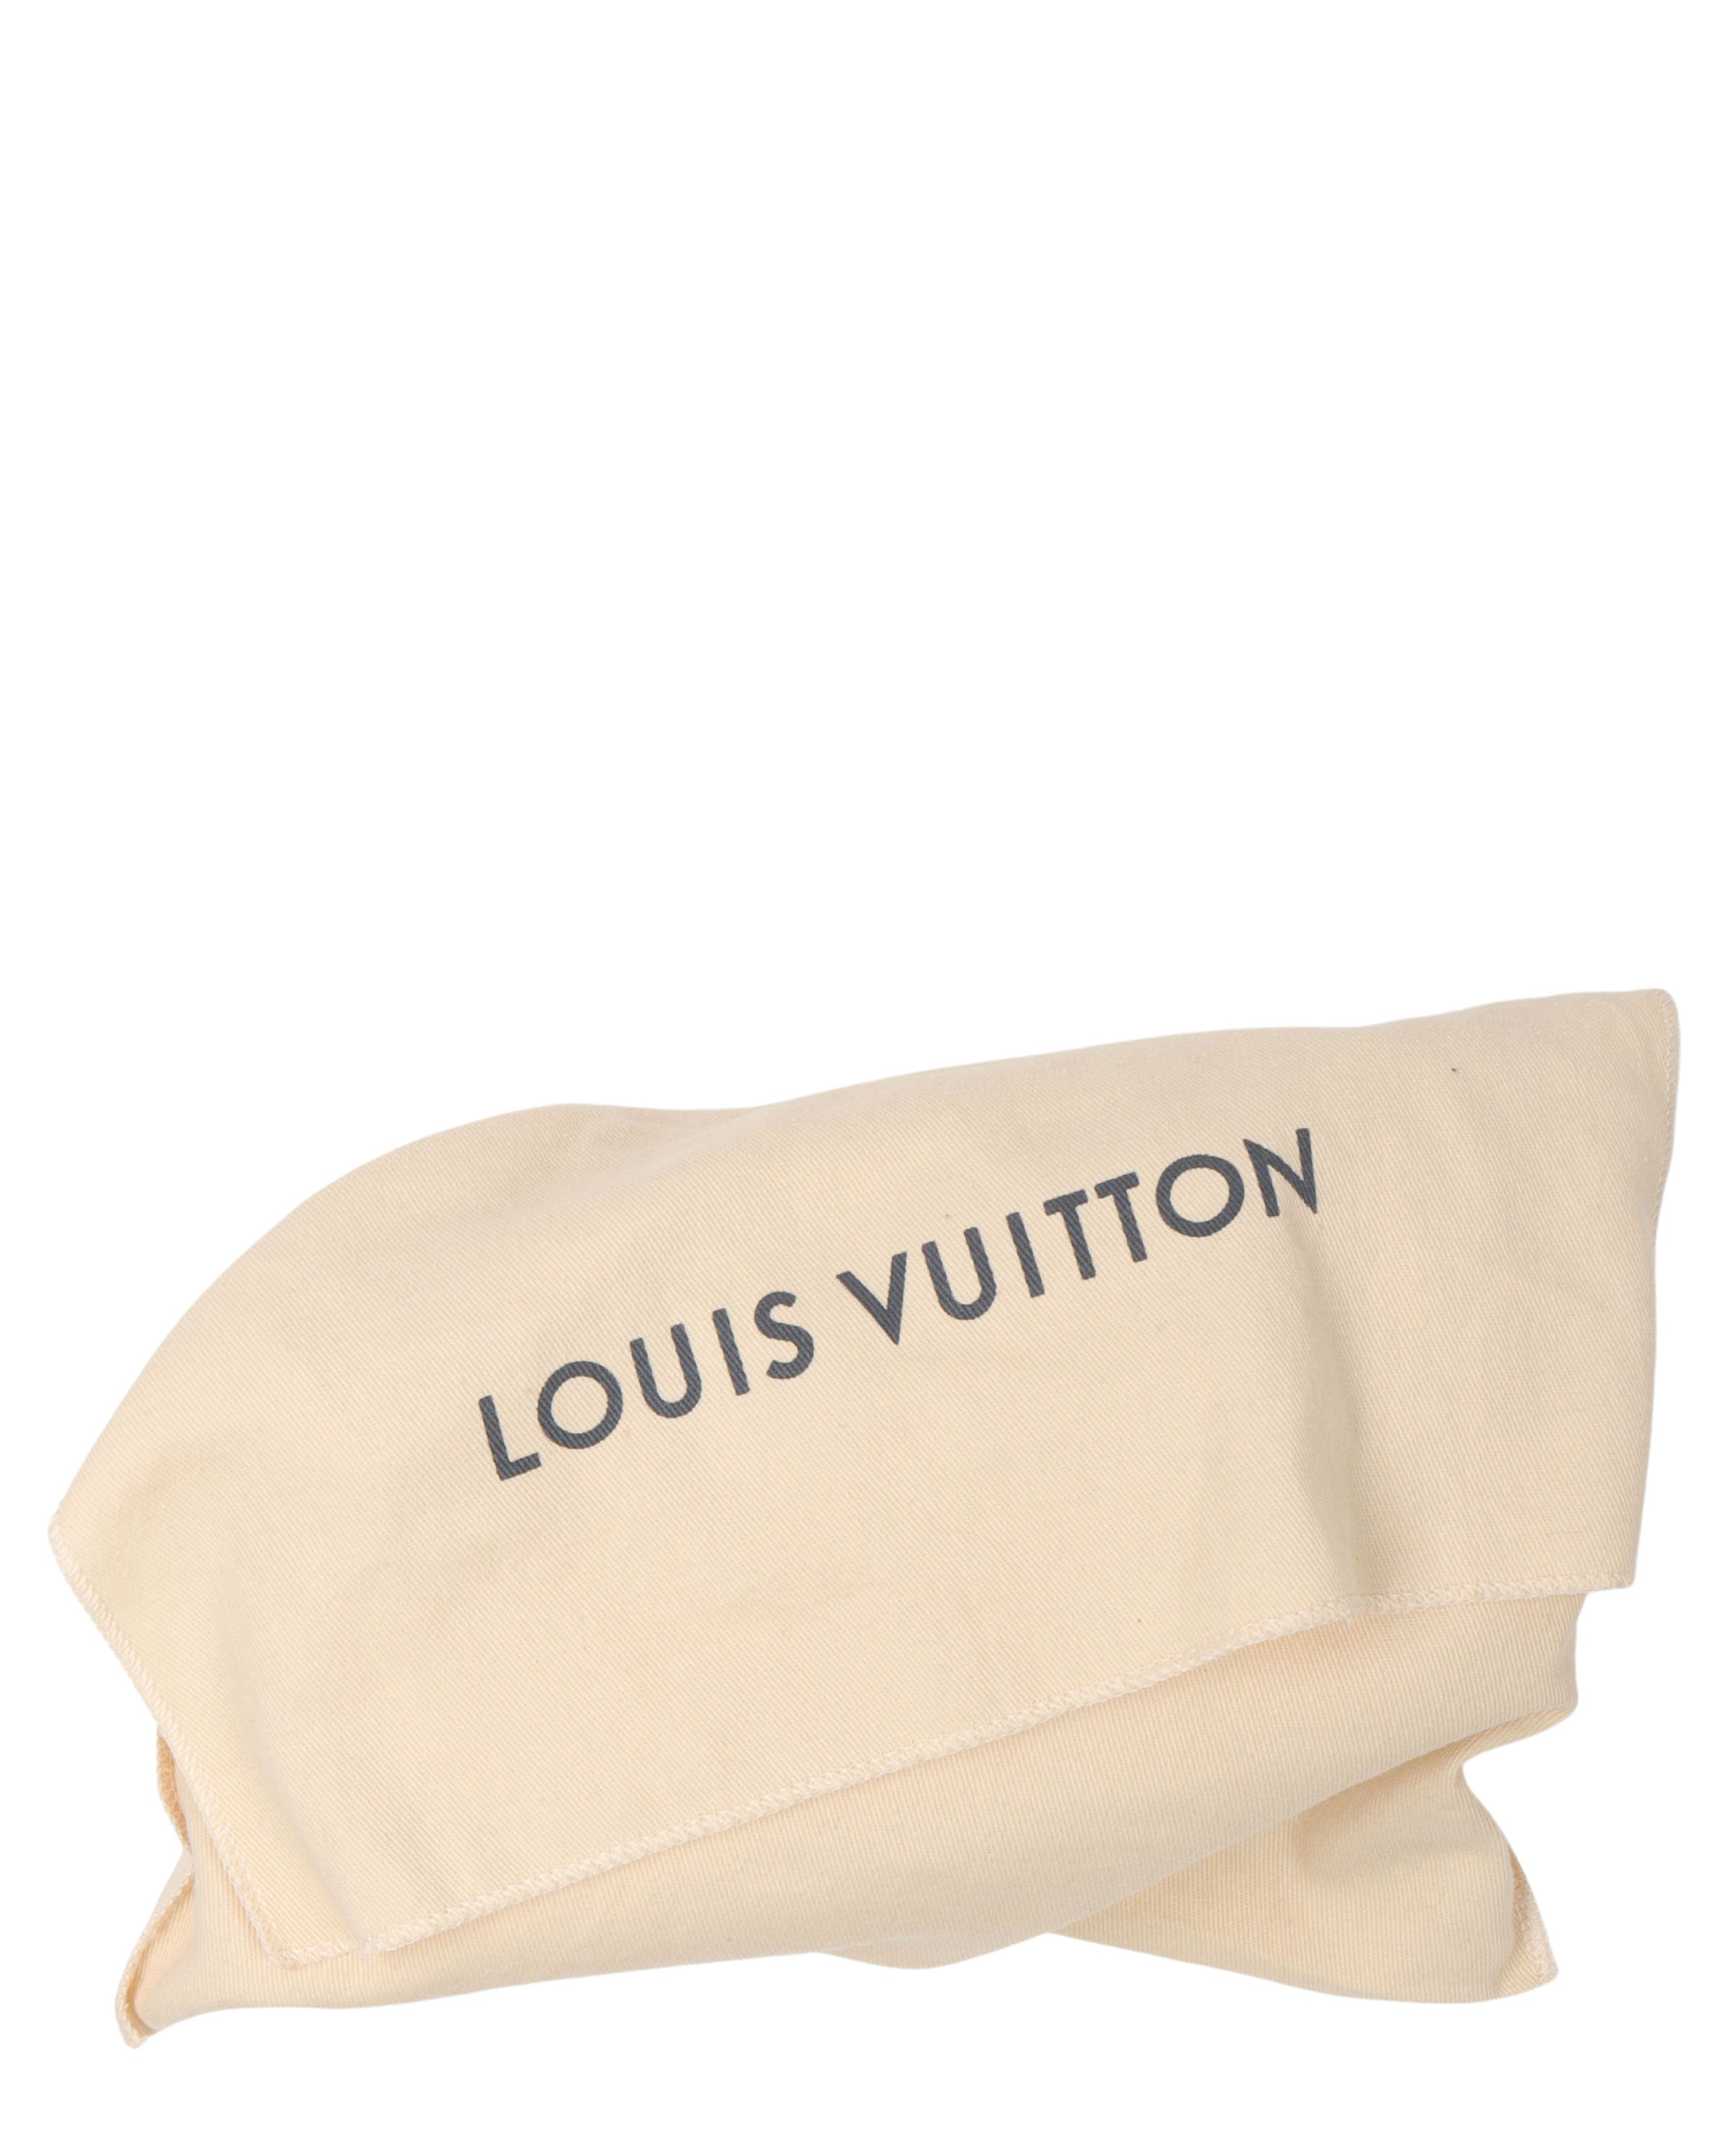 Louis Vuitton  Iridescent Limited Edition Pochette Volga in